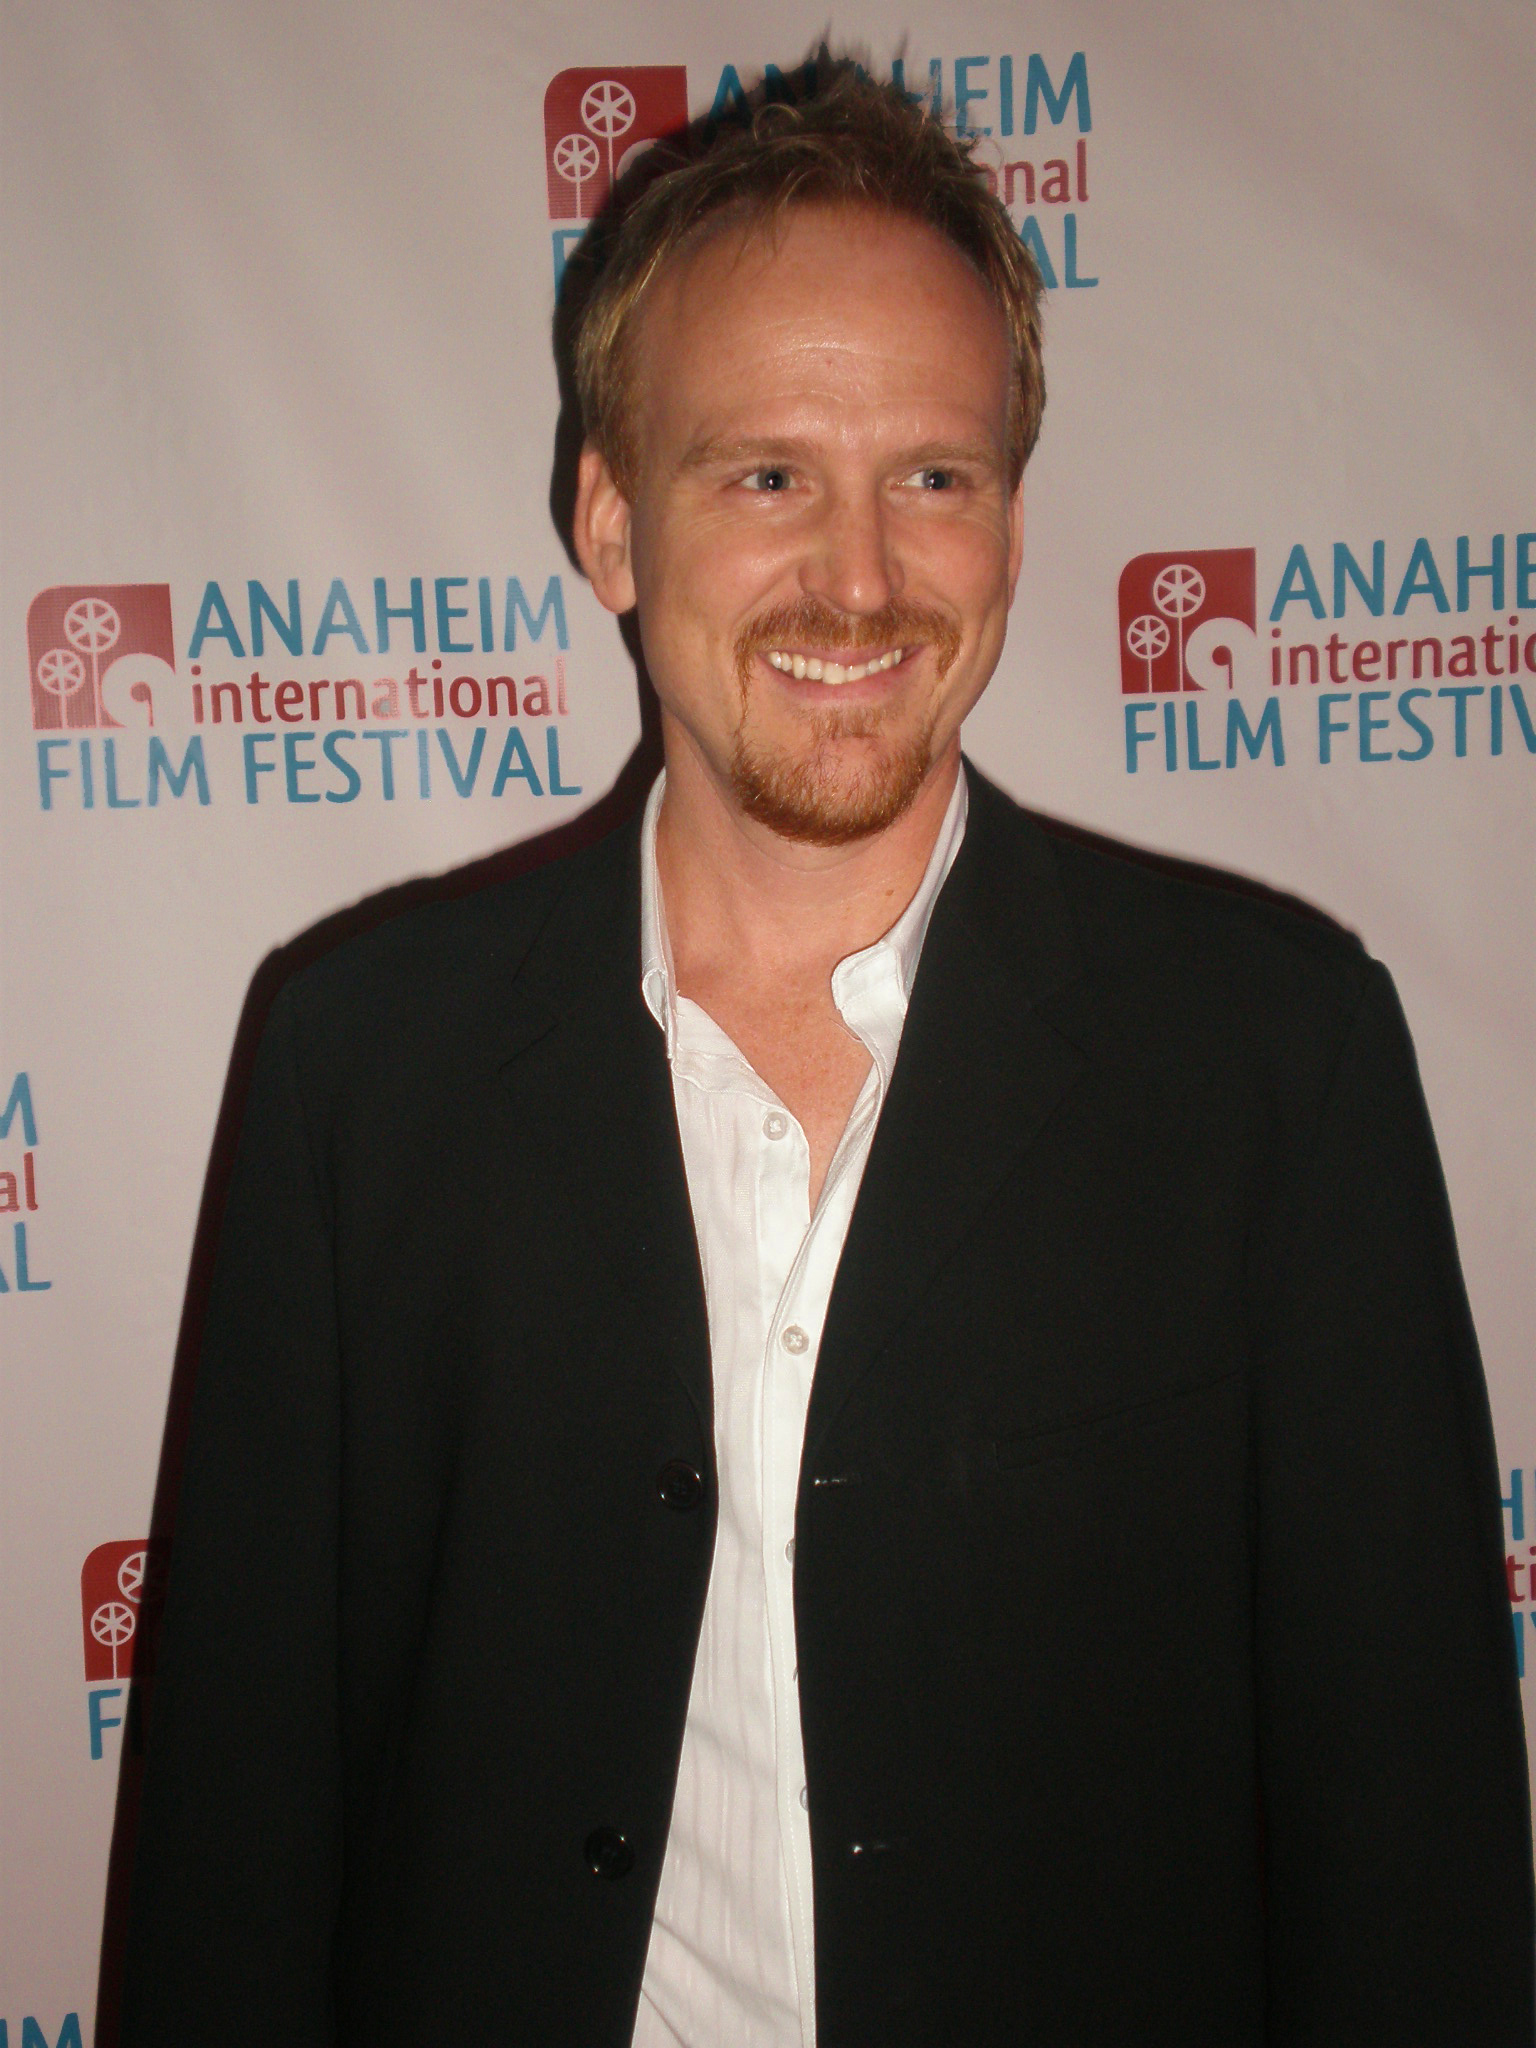 Red carpet at the Anaheim International Film Festival